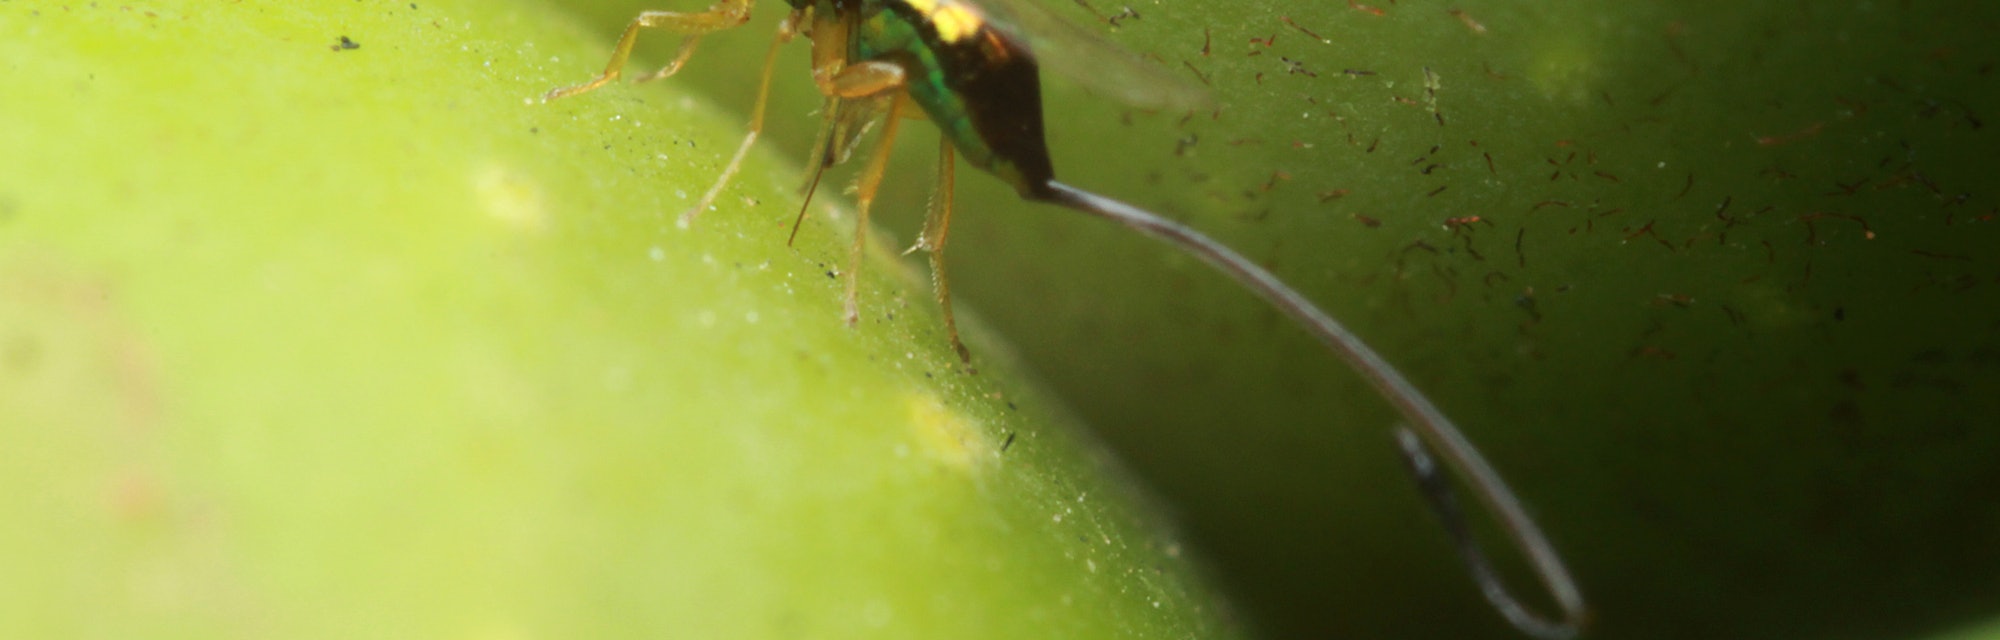 BOTANIC GARDENS, ADELAIDE, AUSTRALIA, NOVEMBER 2013: Non-pollinating fig wasp parasitoid